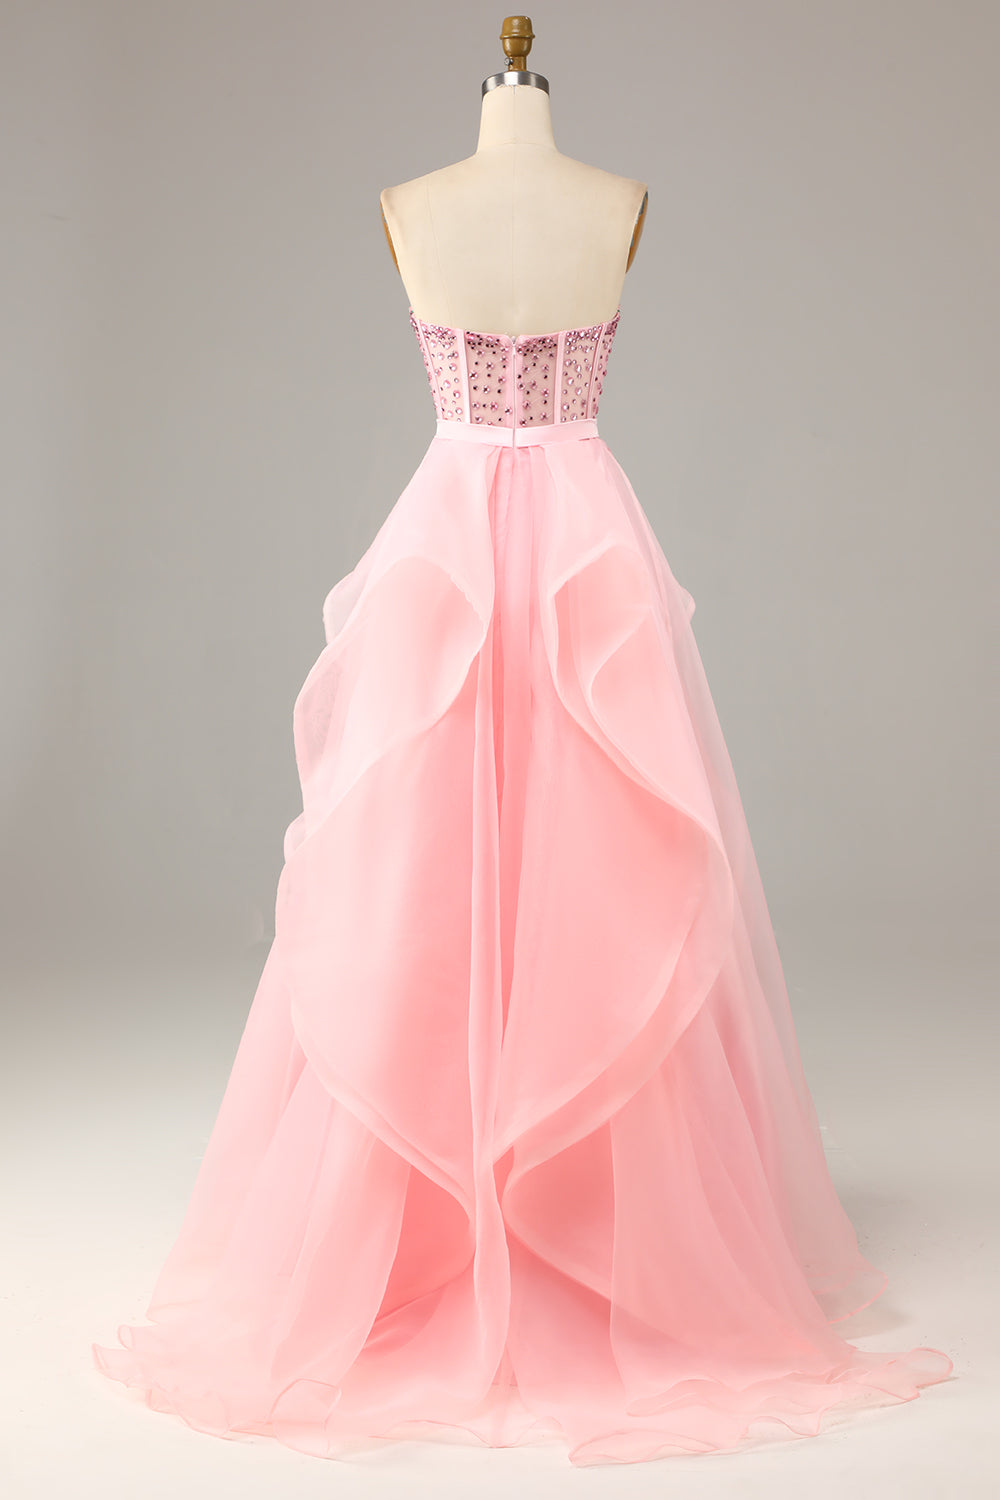 Pink Strapless Sweetheart Ball Gown Evening Dress